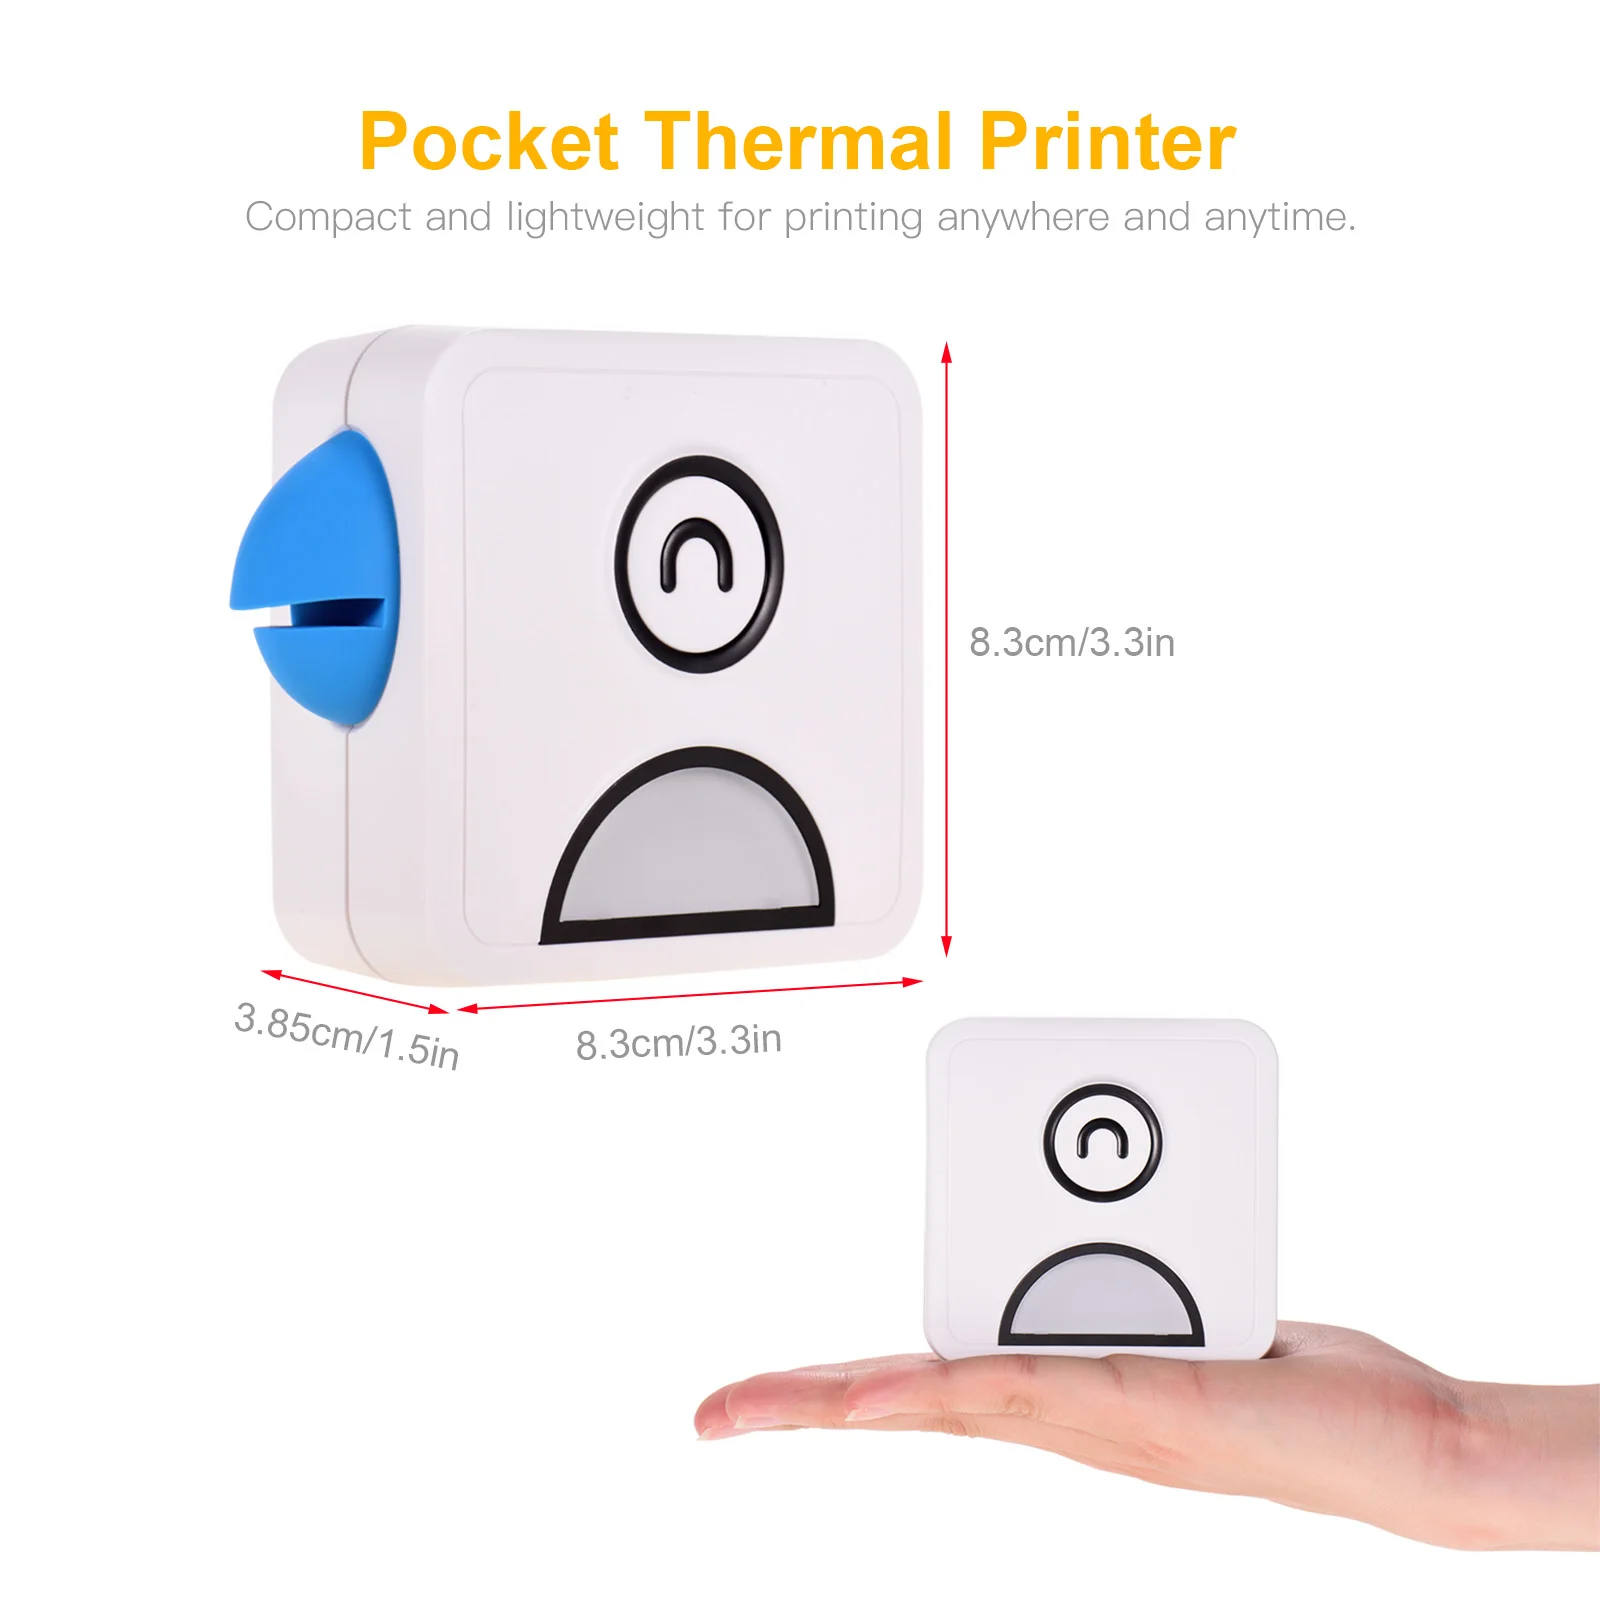 Poooli L1 Pocket Thermal Photo Printer 200dpi Portable BT Wireless Receipt Label Sticker Maker for Work Plan Memo Study Notes